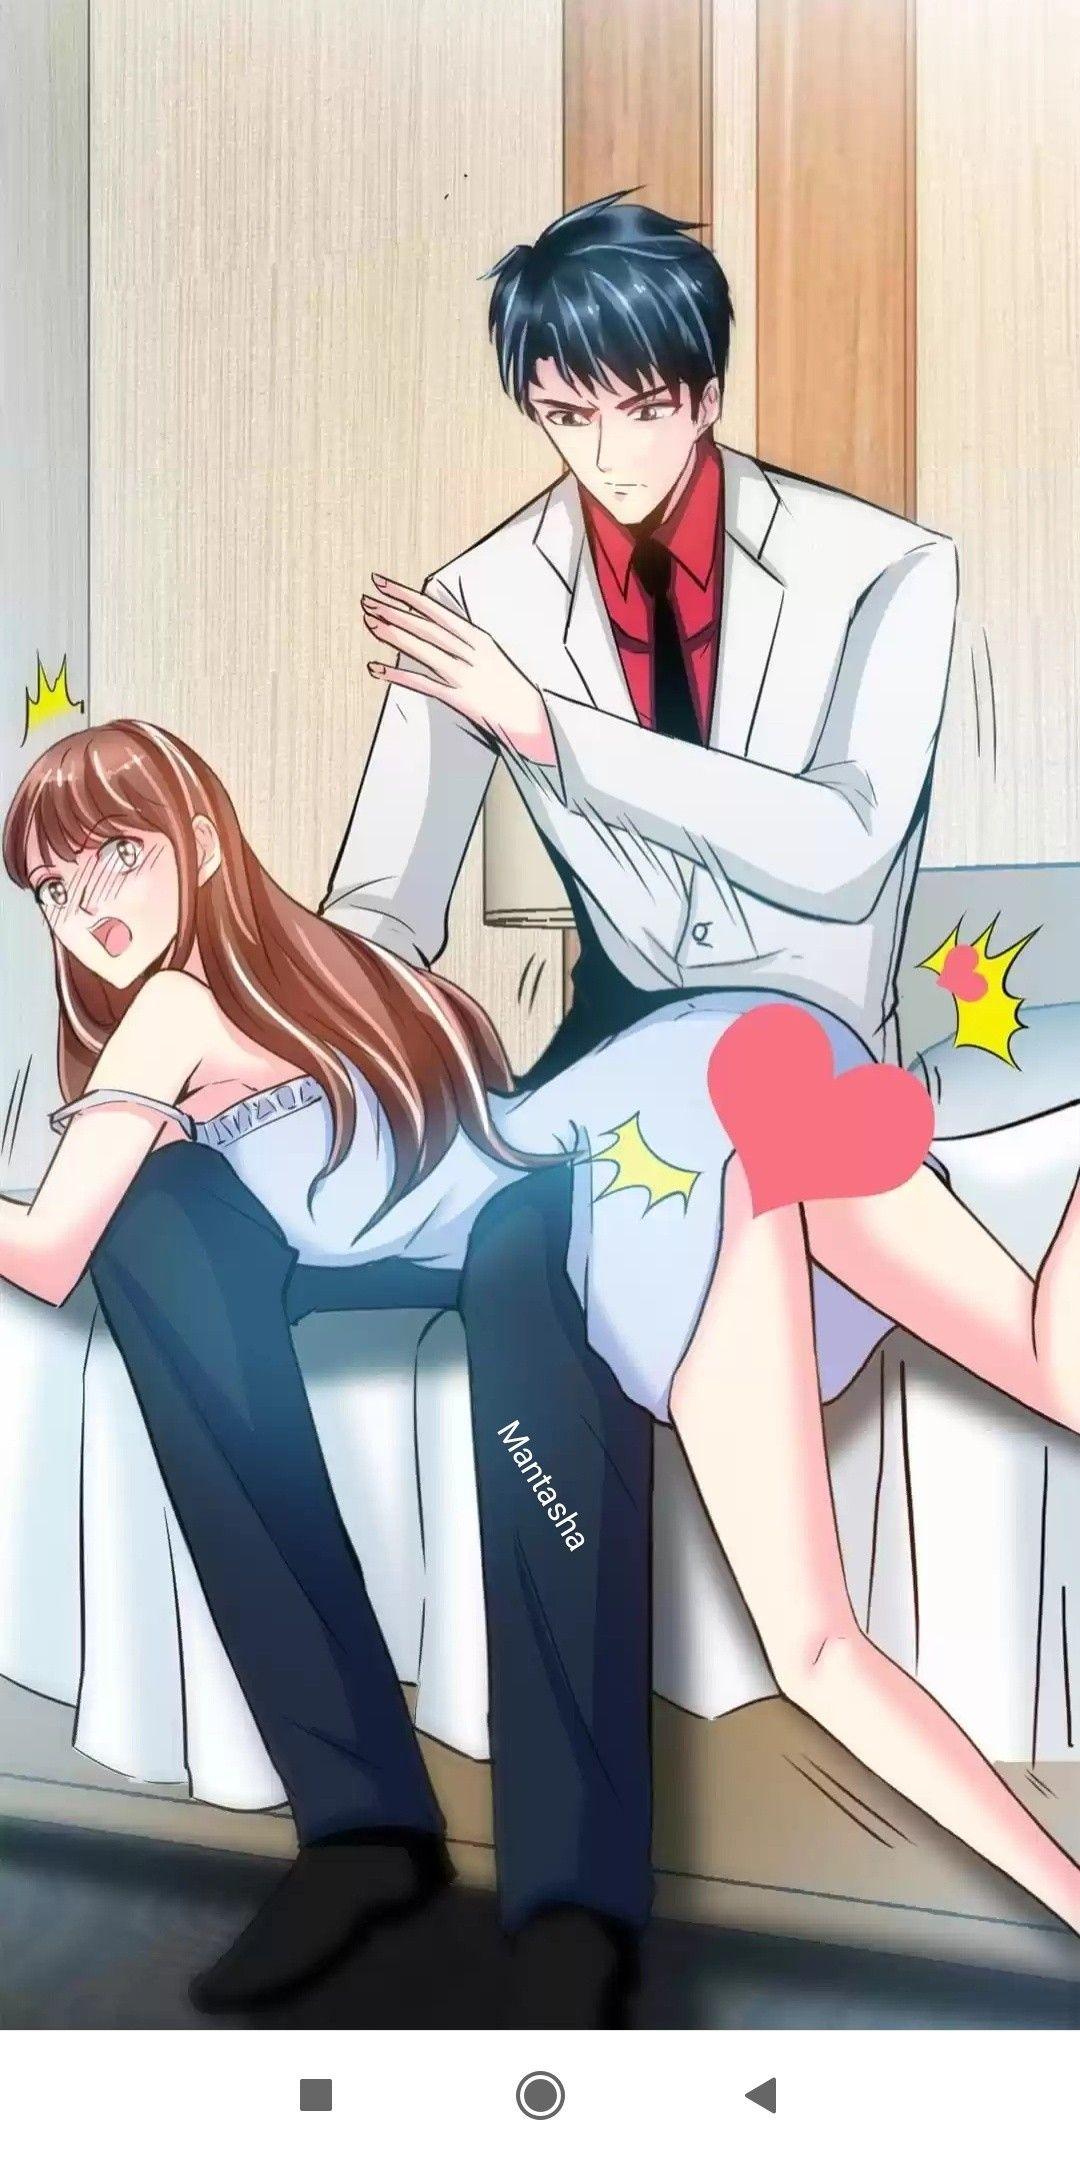 lovely anime couple